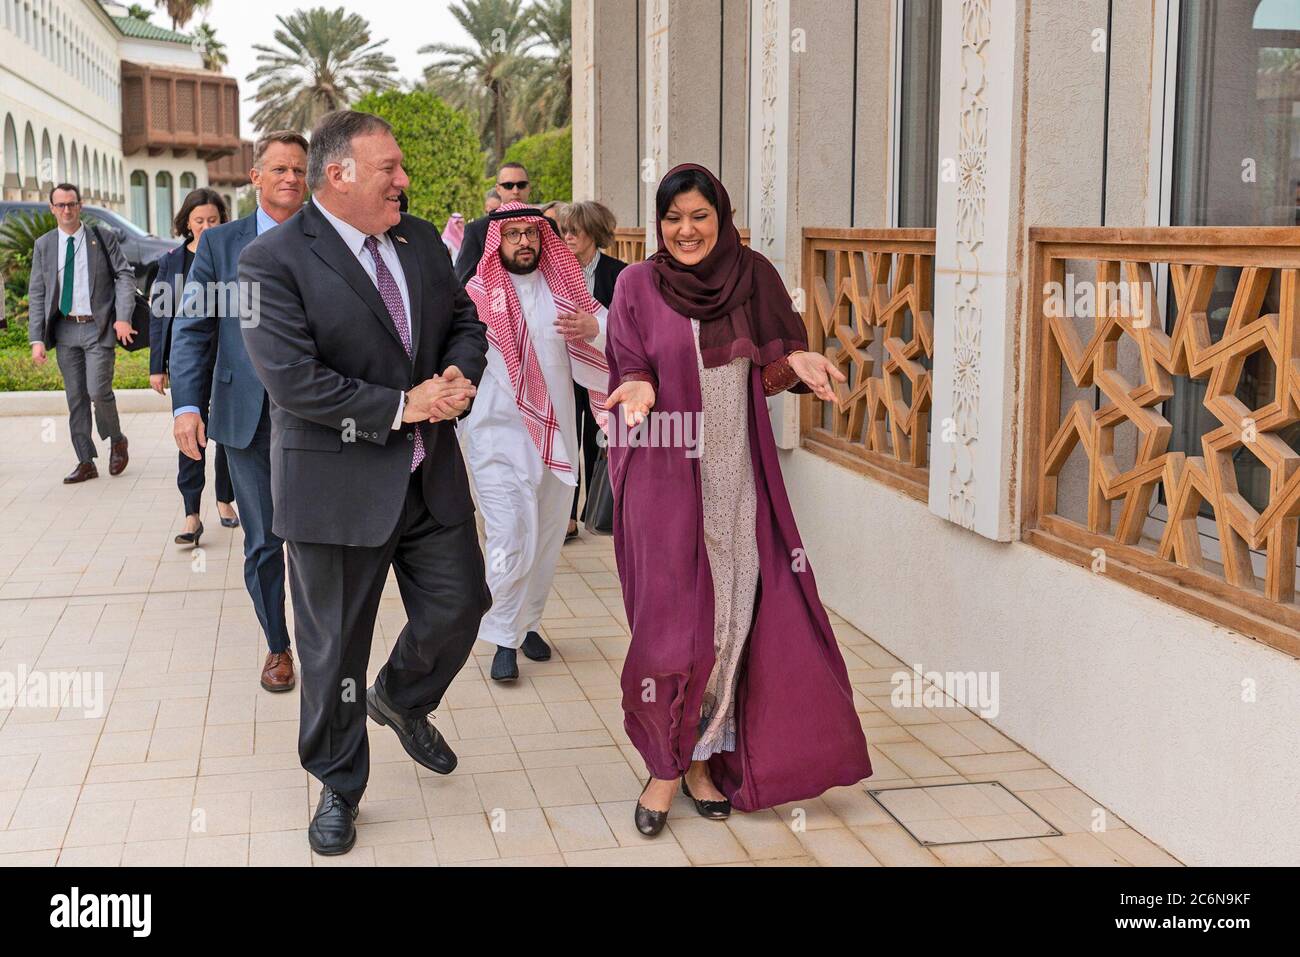 Secretary of State Mike Pompeo visiting Saudi Arabia - Secretary of State Mike Pompeo visits with Saudi Women Leaders in Riyadh ca. February 2020 Stock Photo